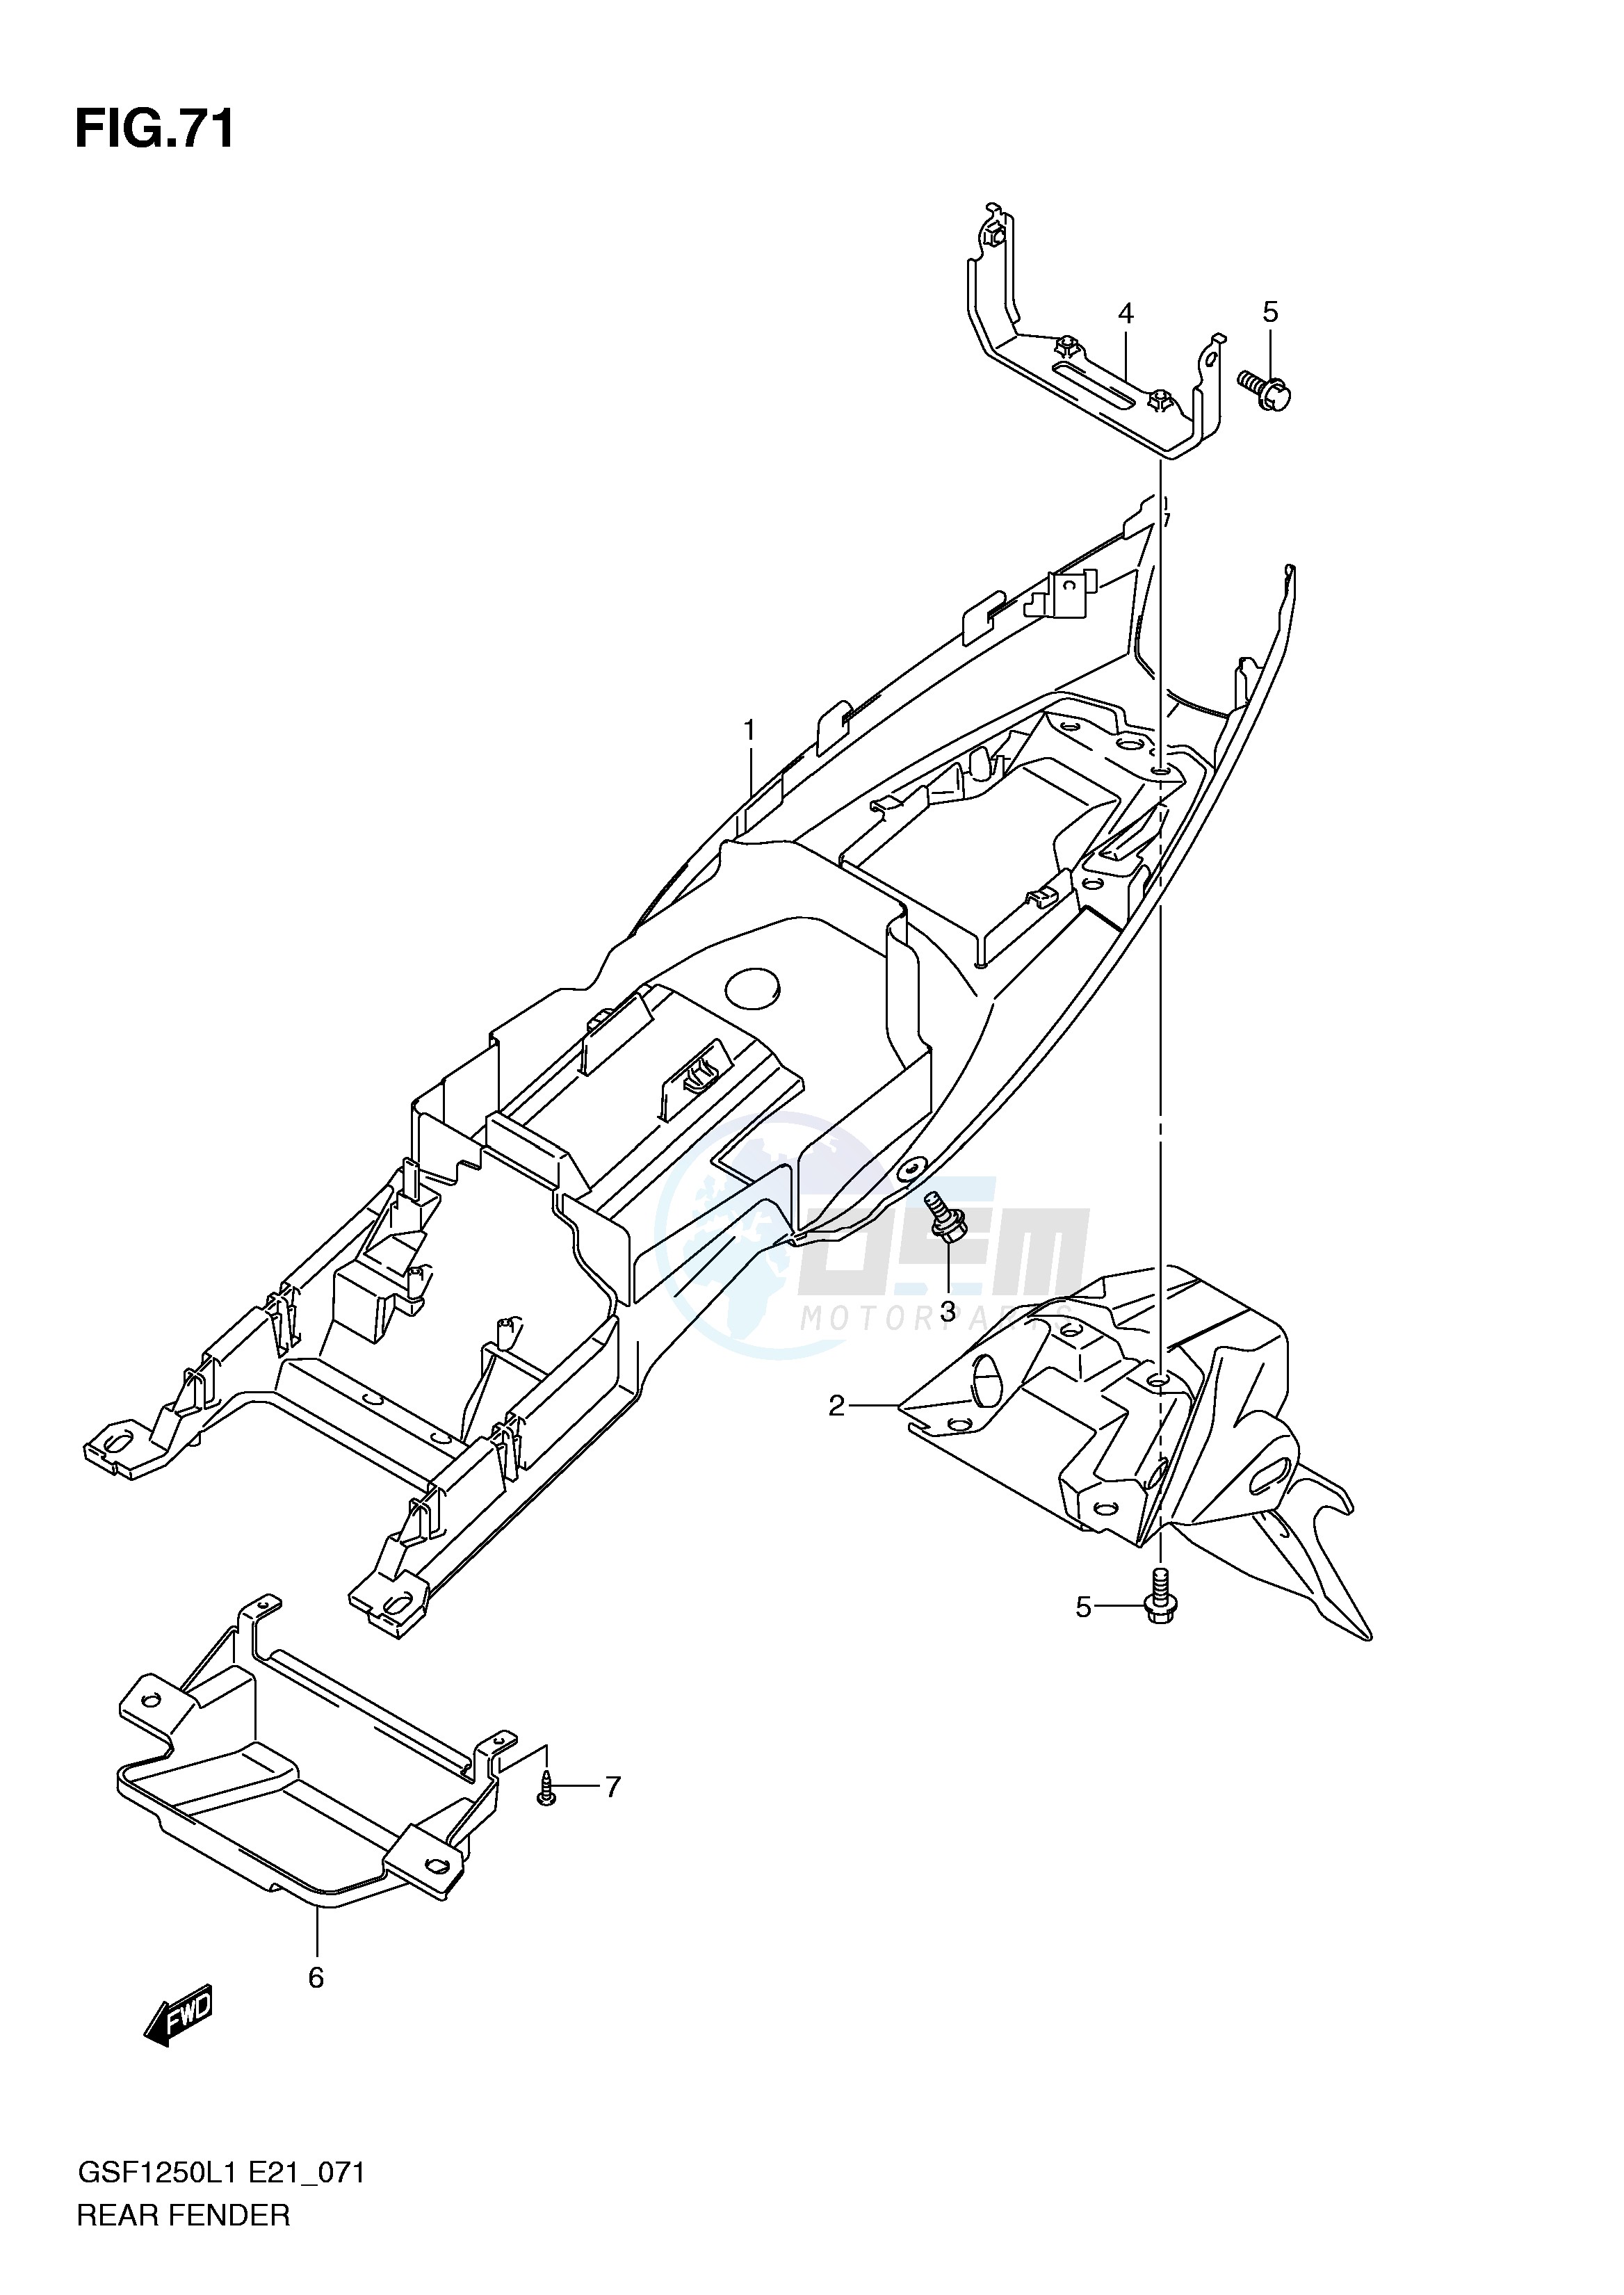 REAR FENDER (GSF1250L1 E21) blueprint